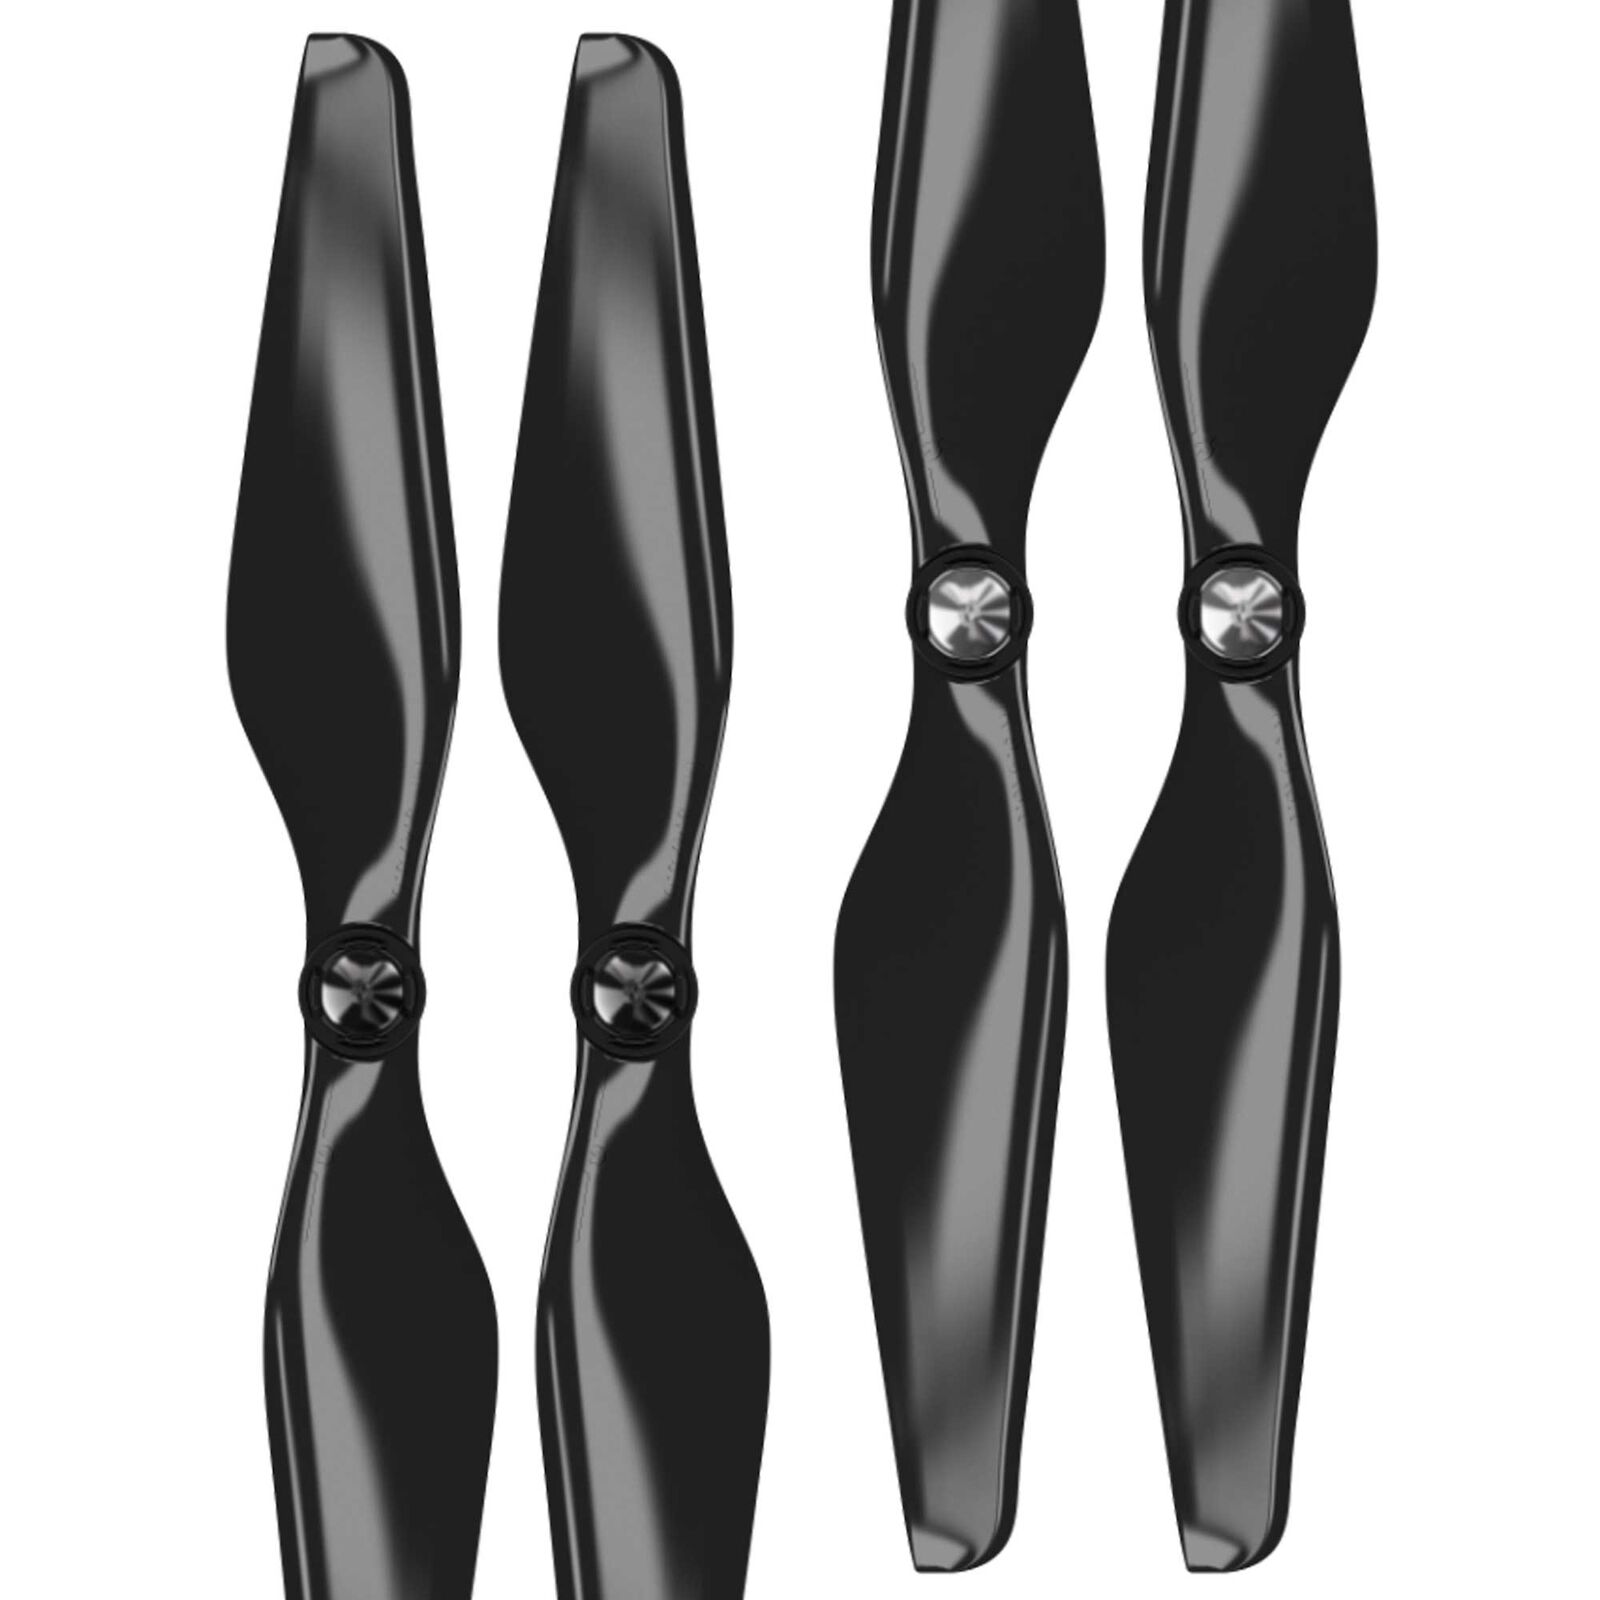 9.4 x 5 MR-PH Propeller C Set, Black (4): DJI Phantom